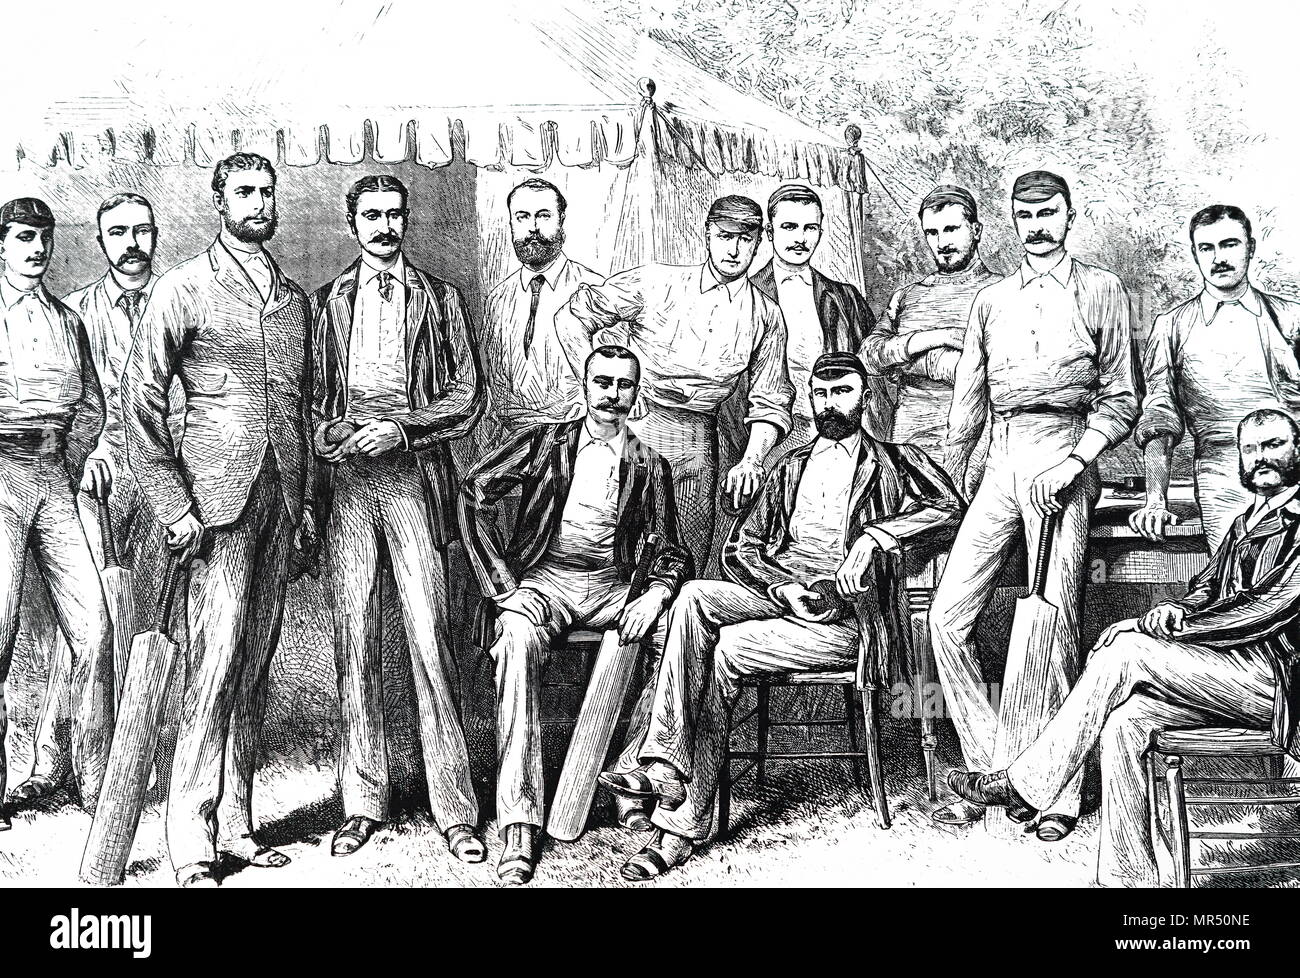 Illustration depicting the Australian touring cricket team of 1882. Left to right: S. P. Jones; A. C. Bannerman, G. J. Bonnor, F. R. Spofforth, J. McCarthy Blackhara, W. L. Murdoch, G. Eugene Palmer, G. Giffe, H. F. Boyle, T. W. Garrett, H. H. Massie, Percy S. MacDonnell, T. Horan. Dated 19th century Stock Photo